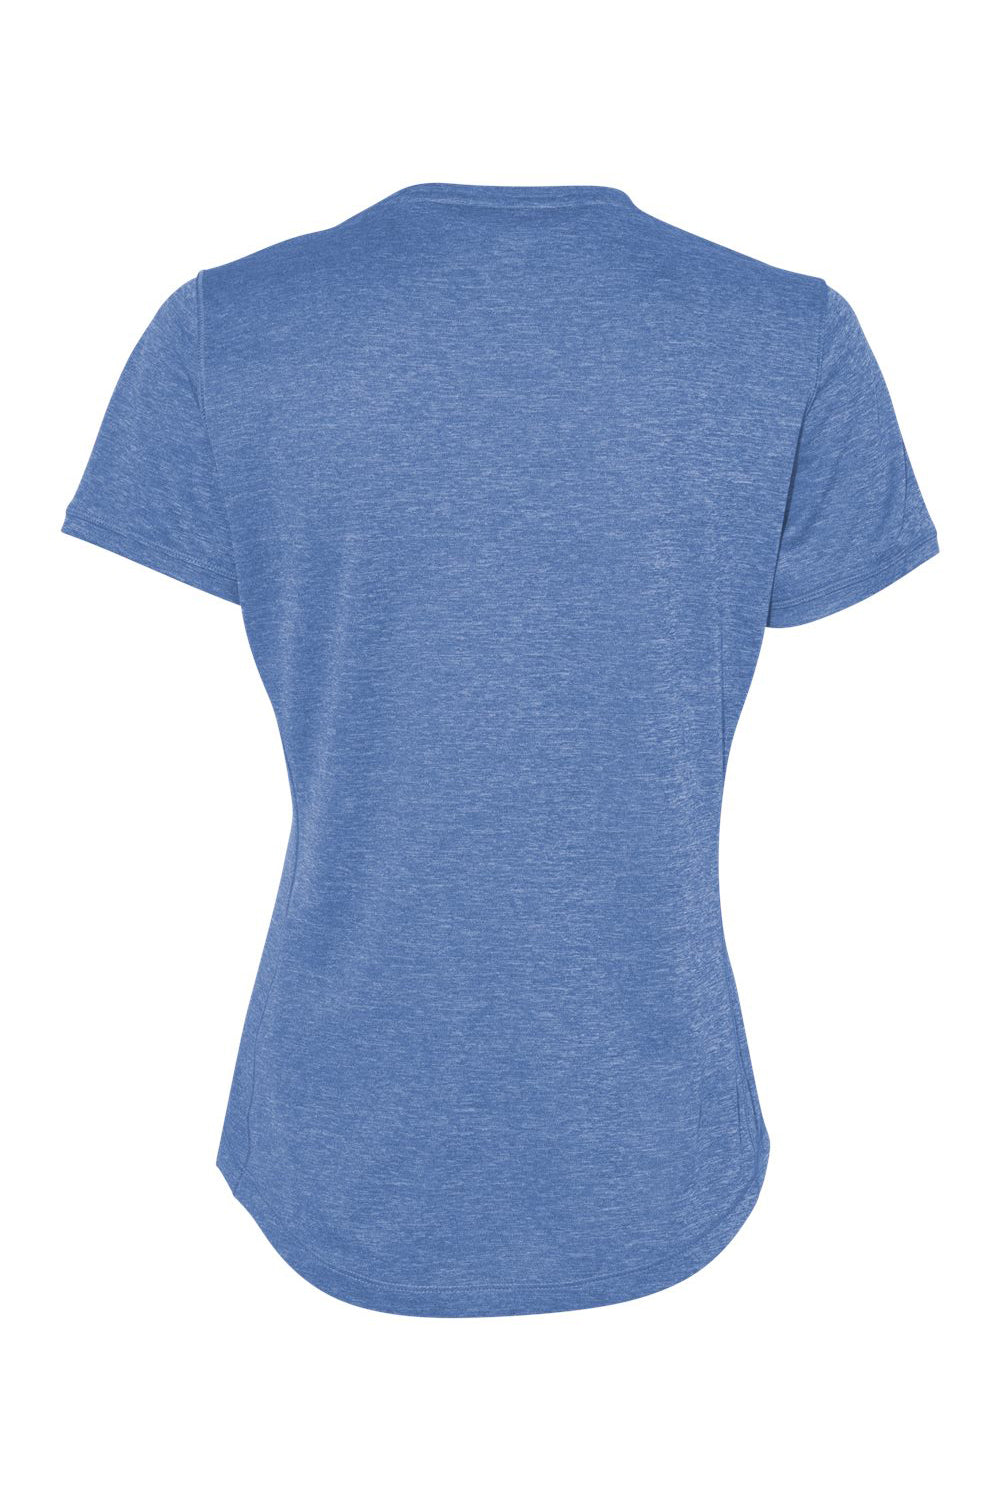 Adidas A377 Womens UPF 50+ Short Sleeve Crewneck T-Shirt Heather Collegiate Royal Blue Flat Back